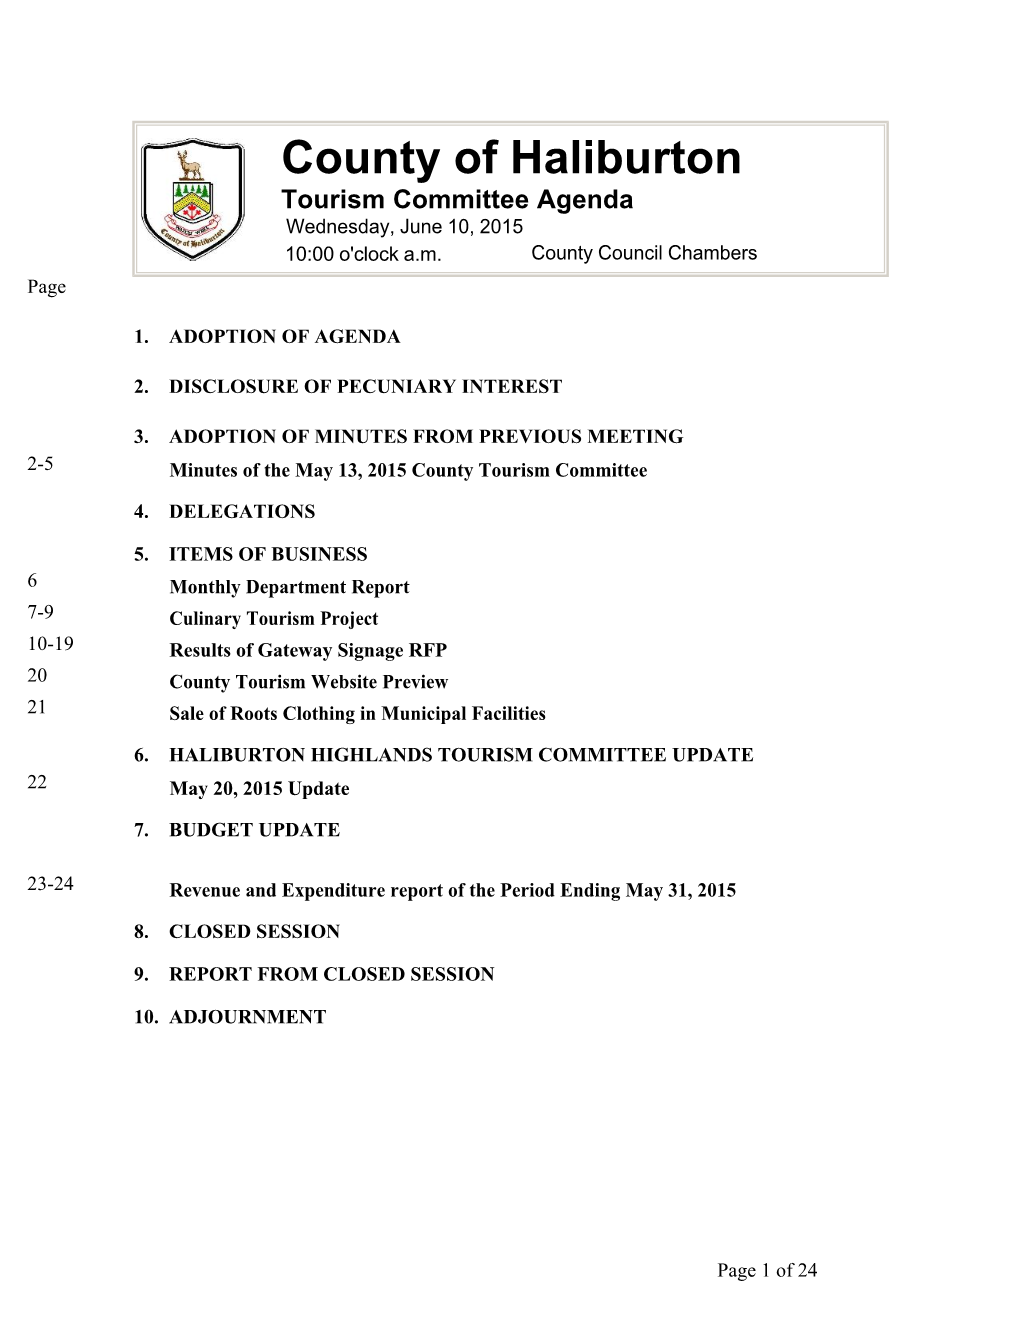 County of Haliburton Tourism Committee Agenda Wednesday, June 10, 2015 10:00 O'clock A.M